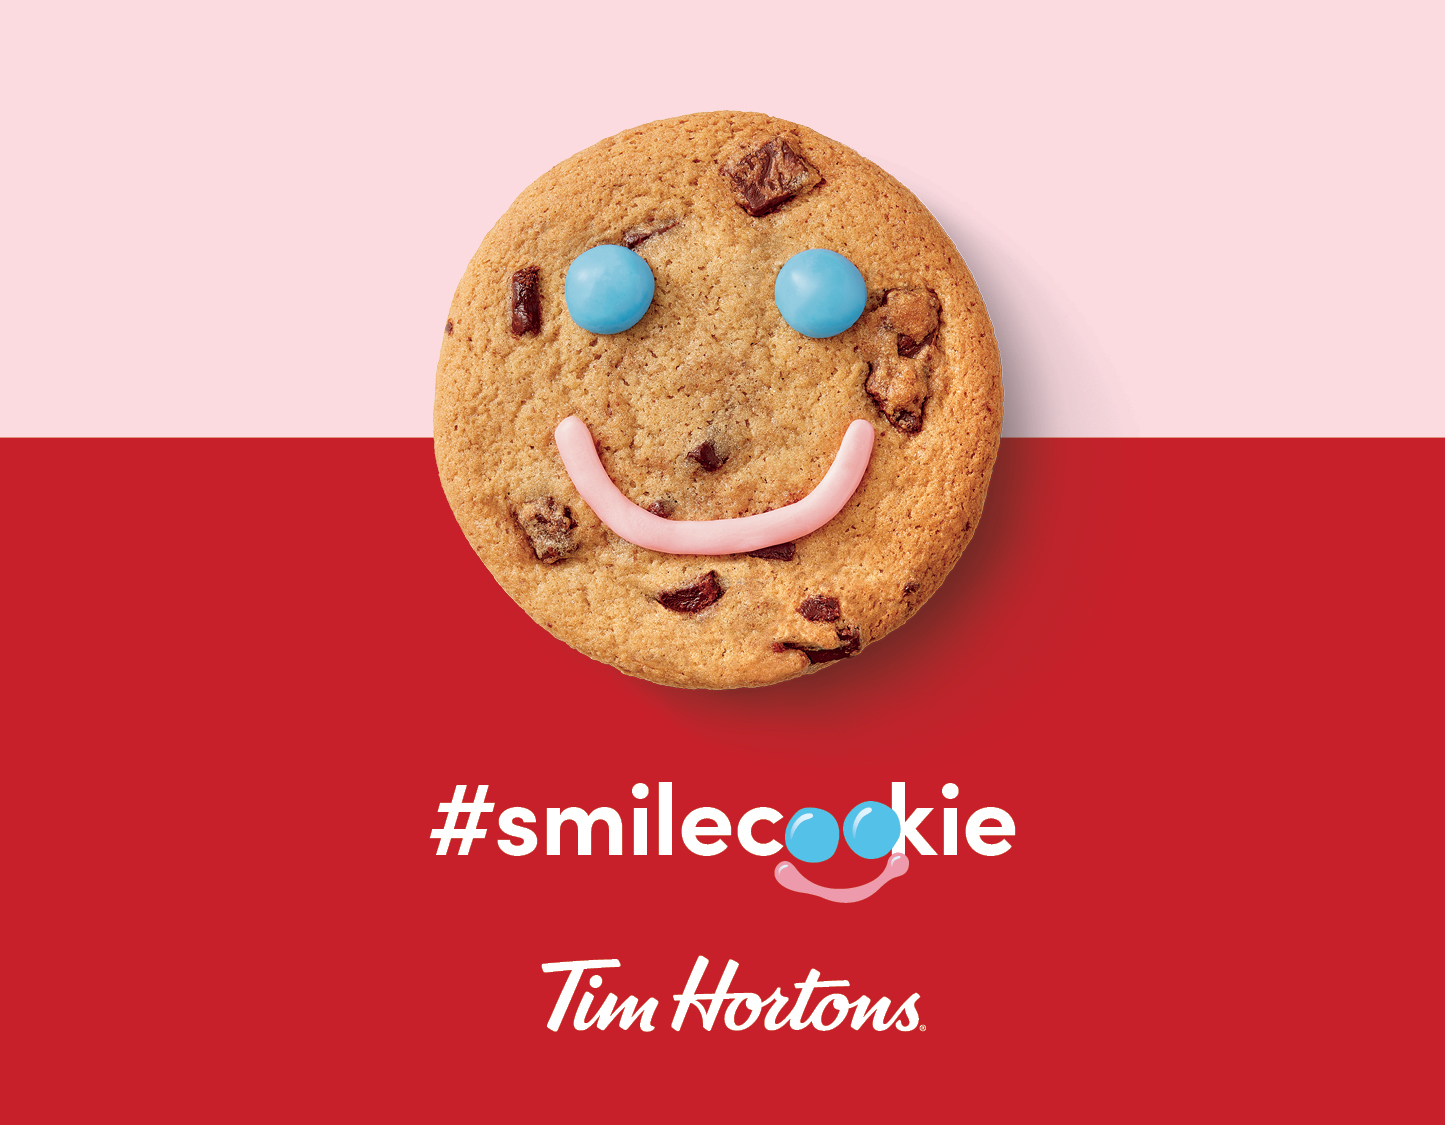 Smile Cookies 2023: Dreifa hamingju einni skemmtun í einu